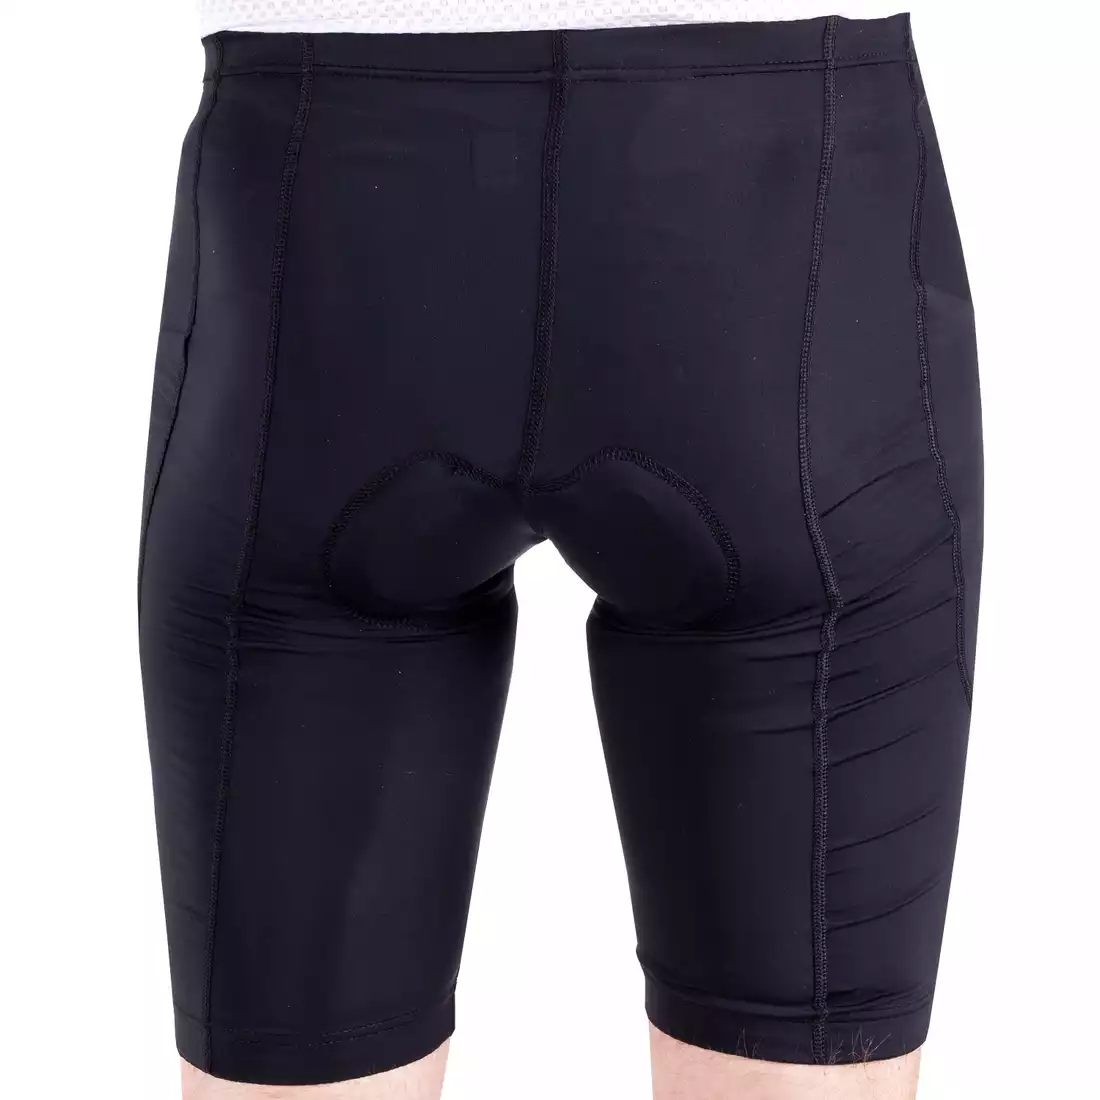 DEKO POCKET men's cycling shorts, black